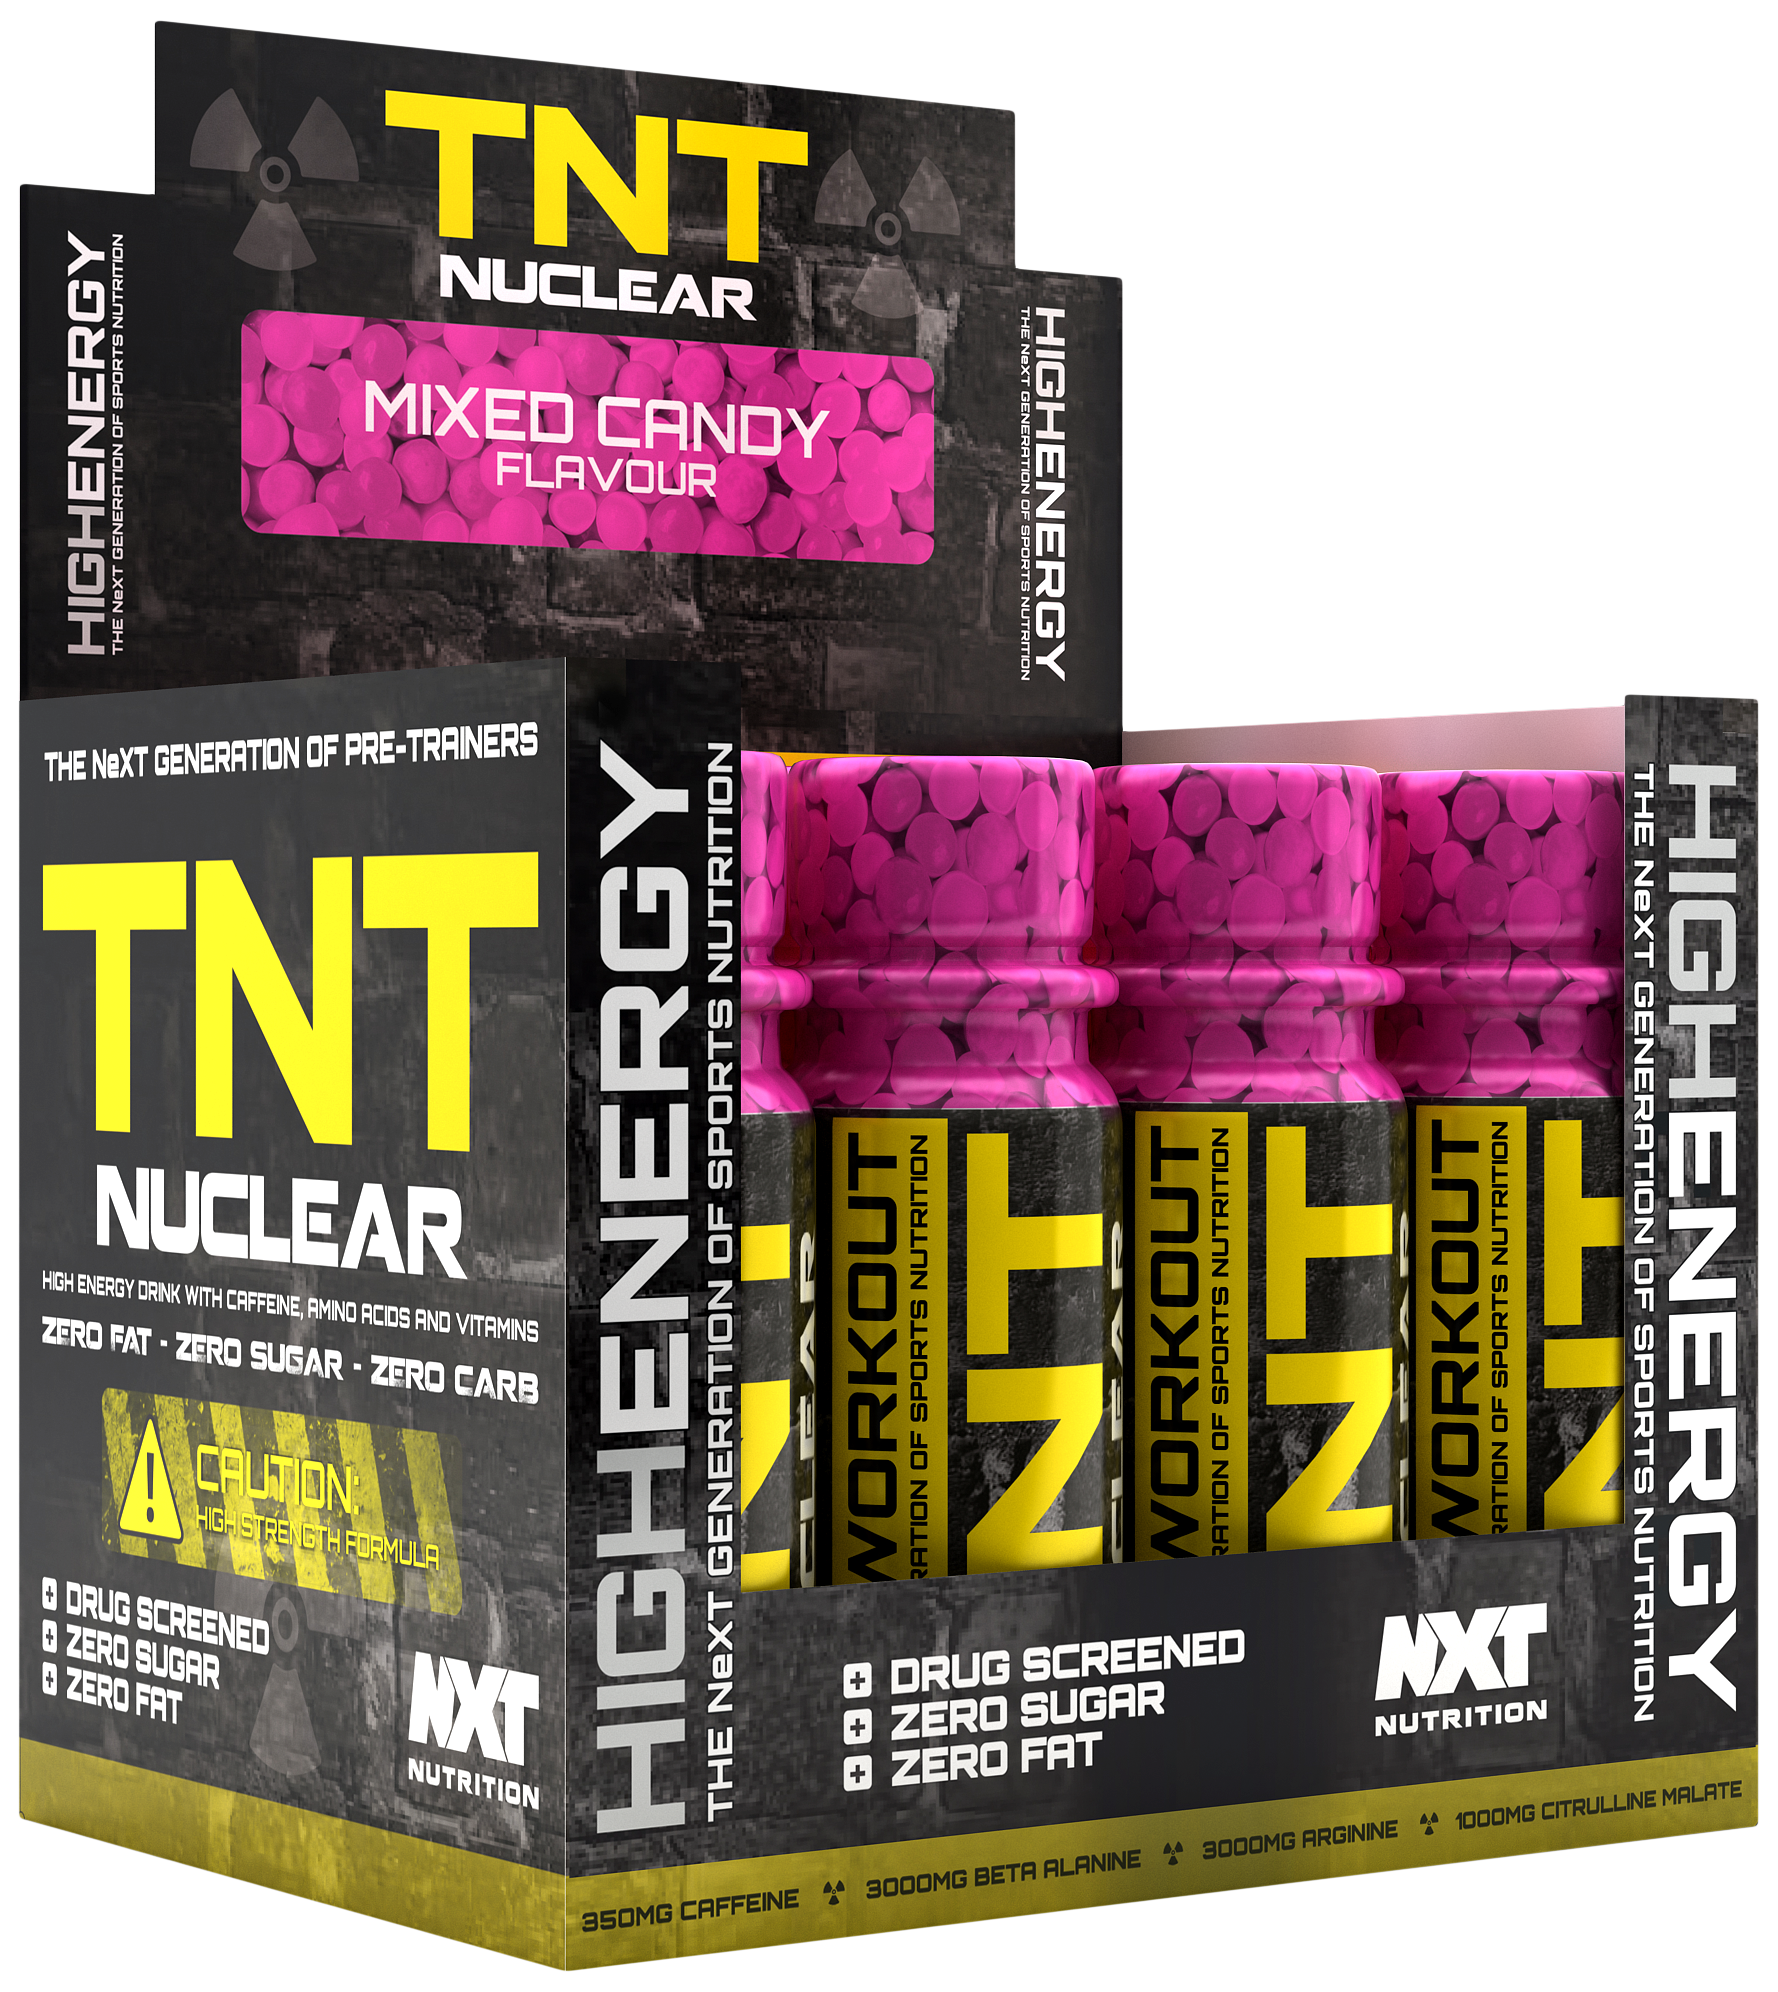 TNT Nuclear Shots 12 pack